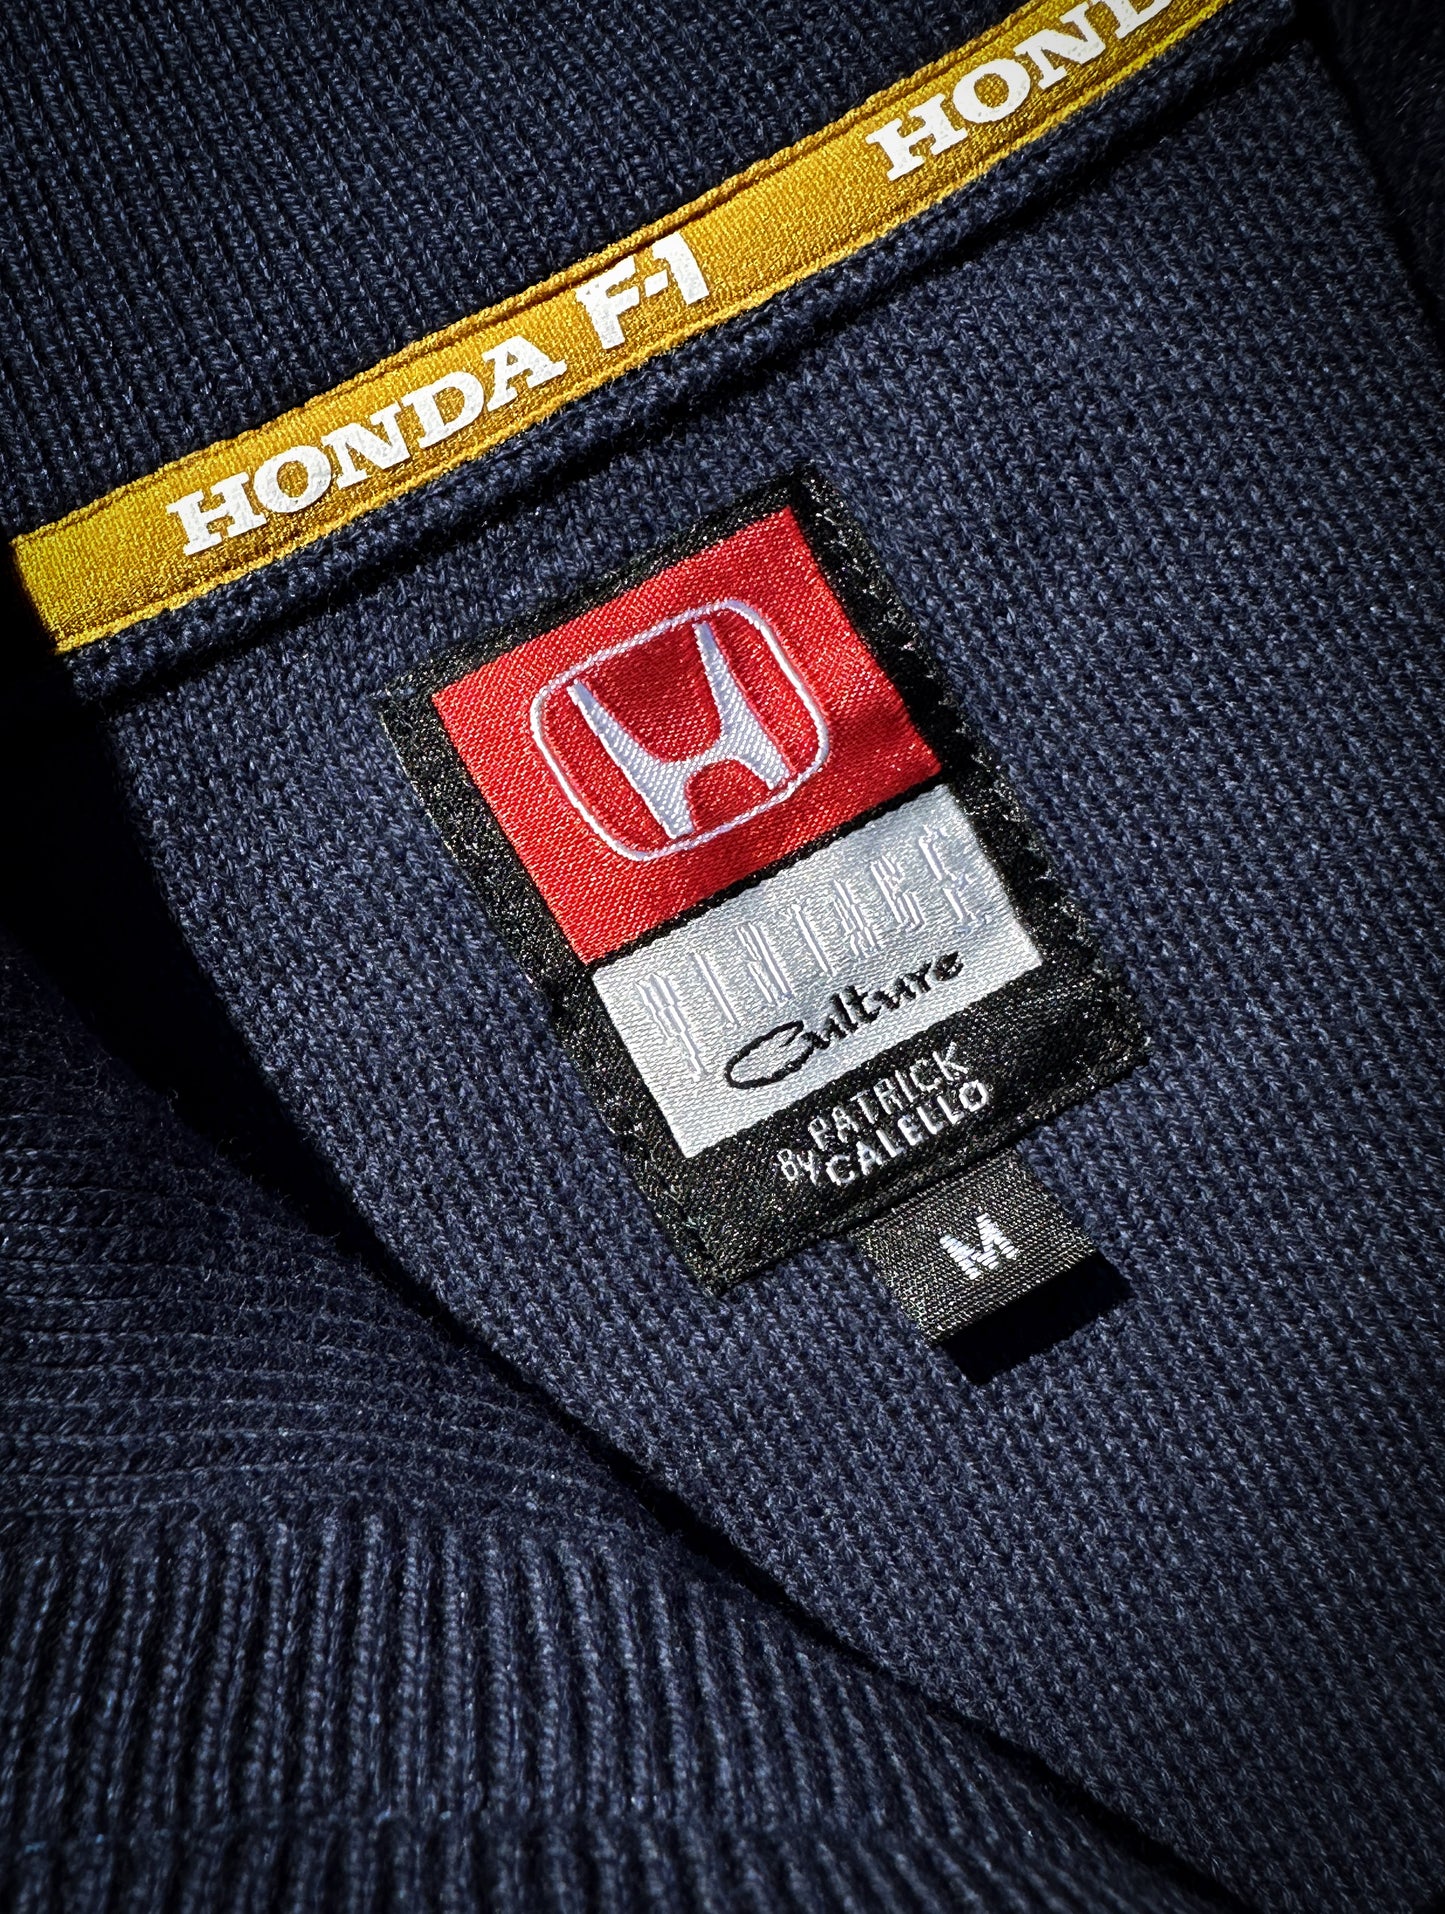 1986 Honda F1 Team 1/4-Zip Sweater (Blue)